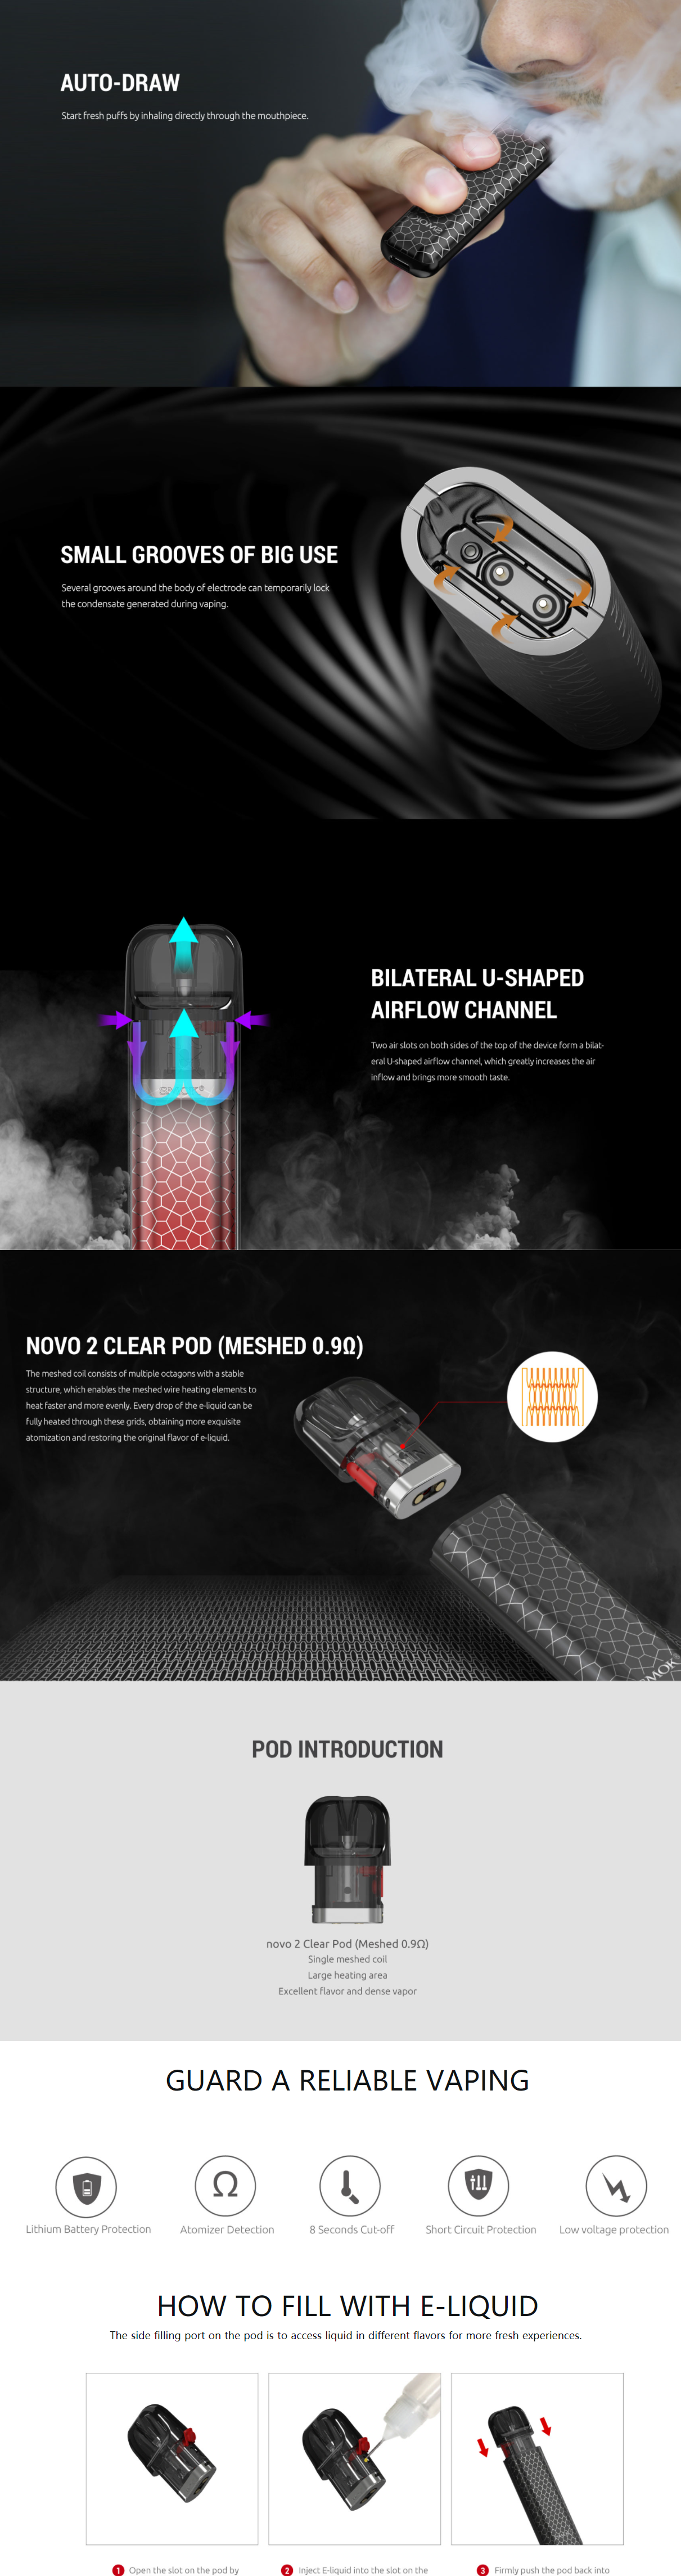 SMOK Novo 2S Kit For Sale